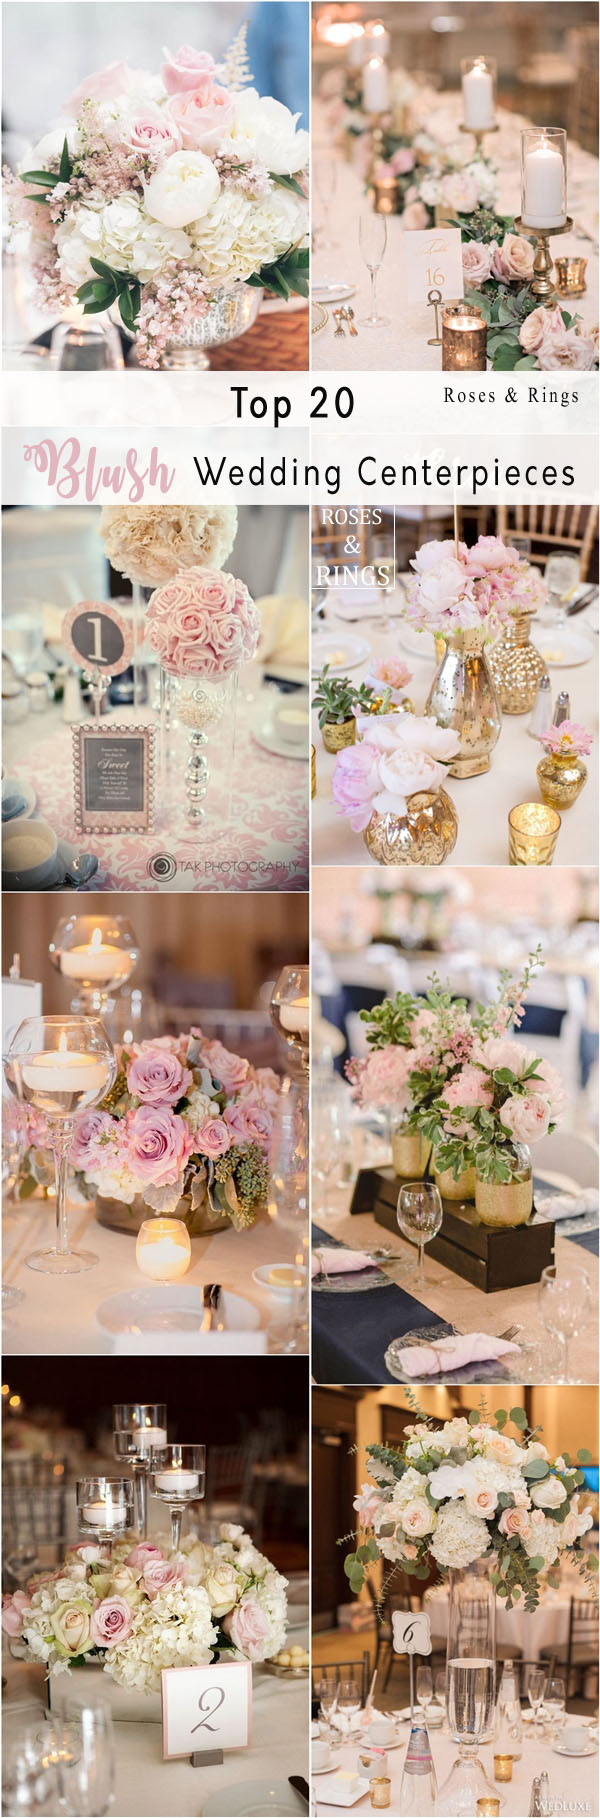 blush pink wedding centerpieces decor ideas